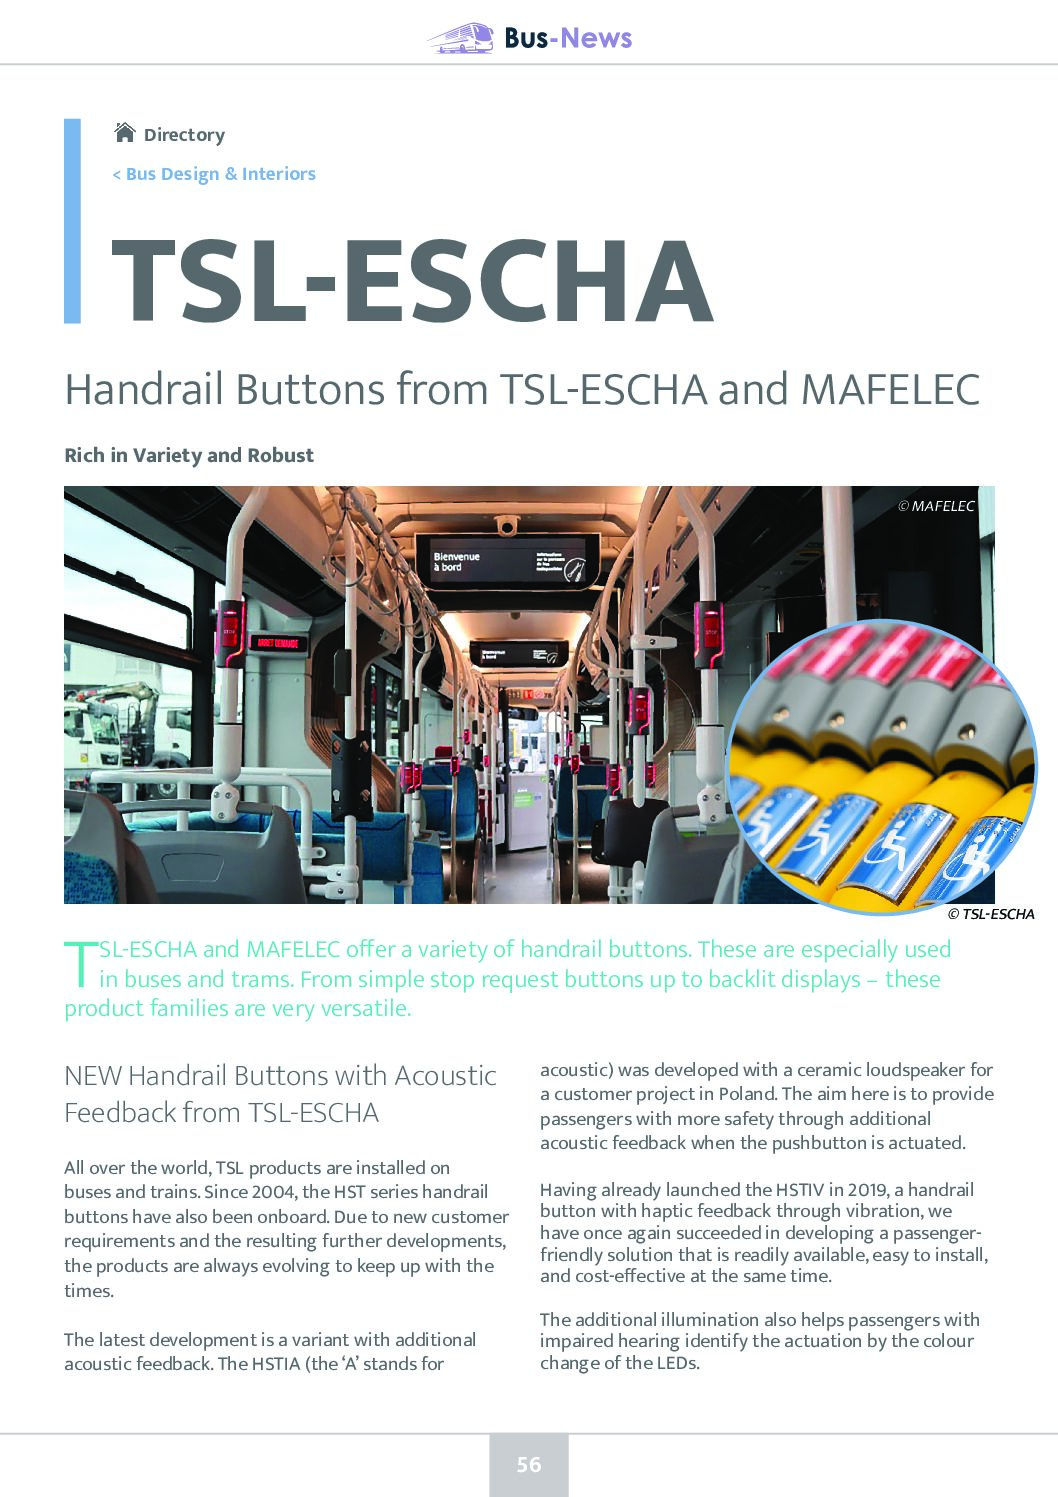 Handrail Buttons from TSL-ESCHA and MAFELEC